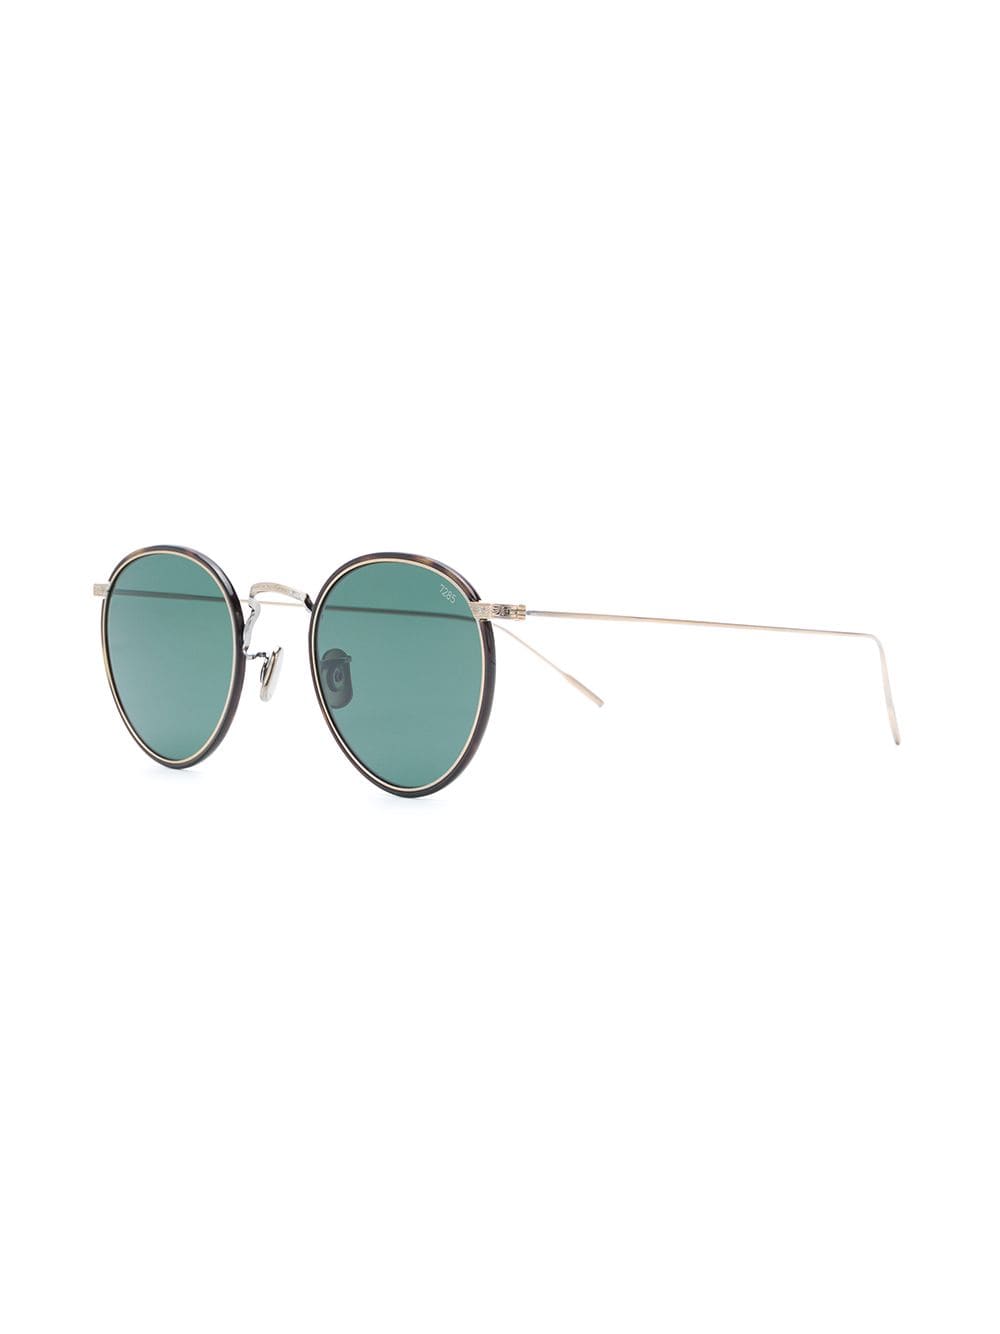 Image 2 of Eyevan7285 tortoiseshell round frame sunglasses